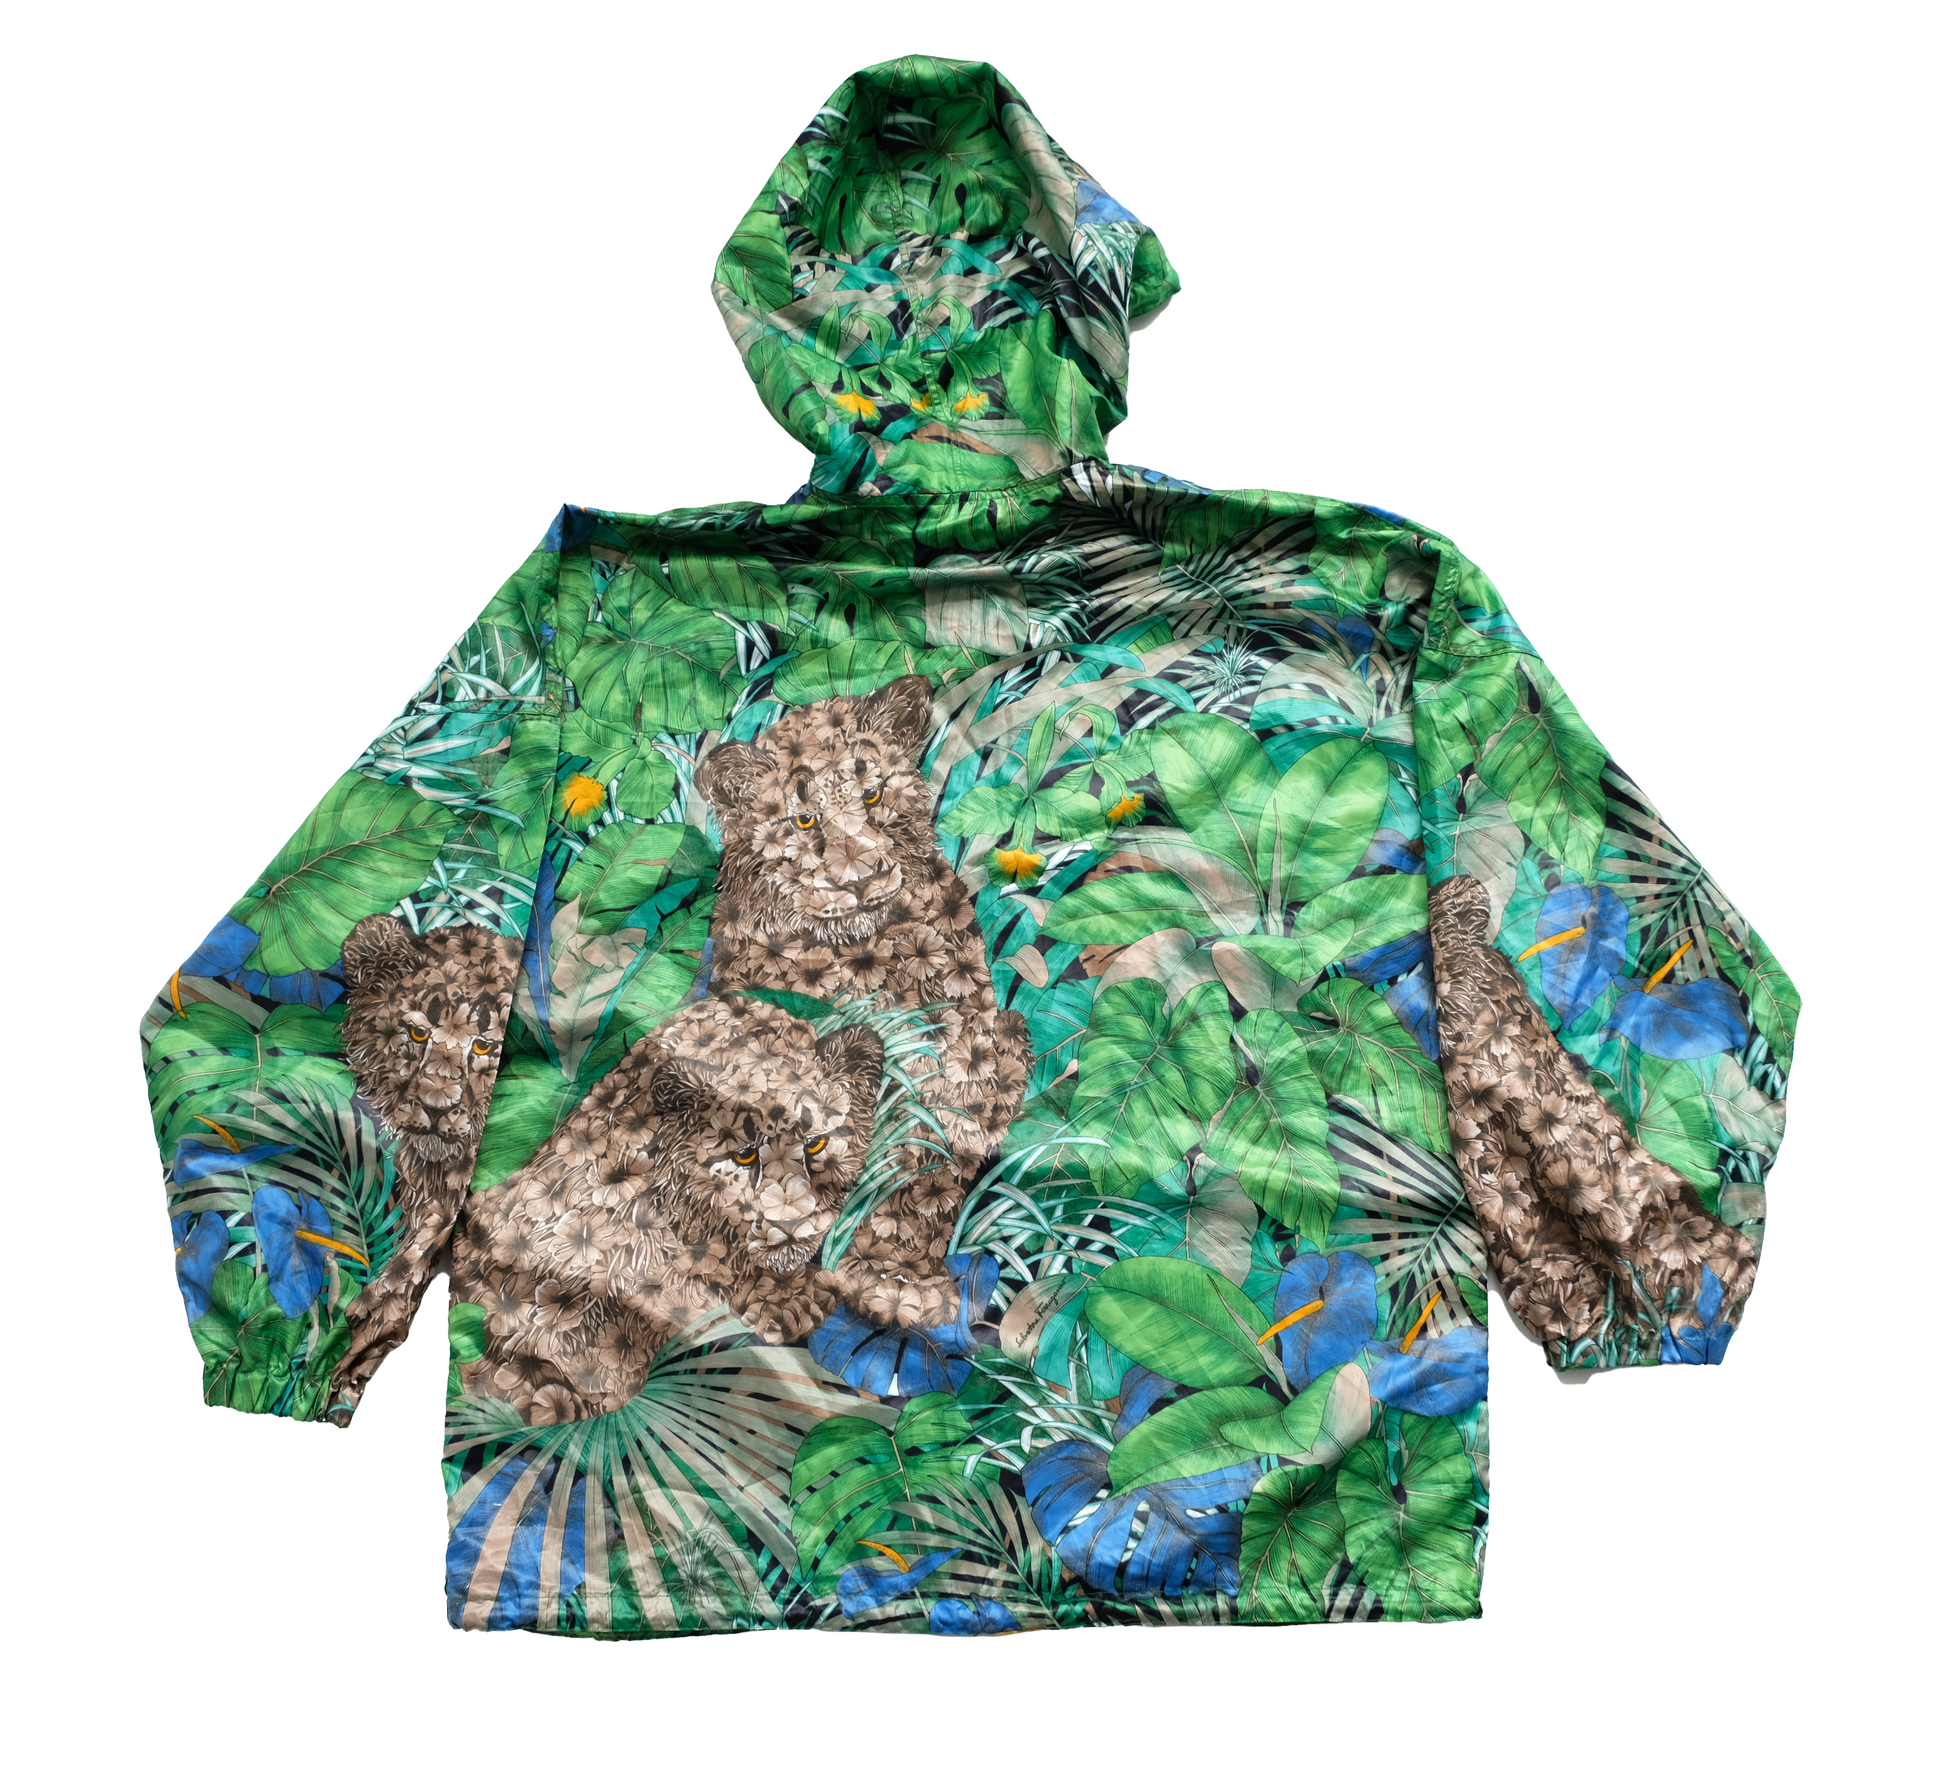 Salvatore Ferragamo Vintage Hooded Blouson Jacket in Green Jungle Print, M-L